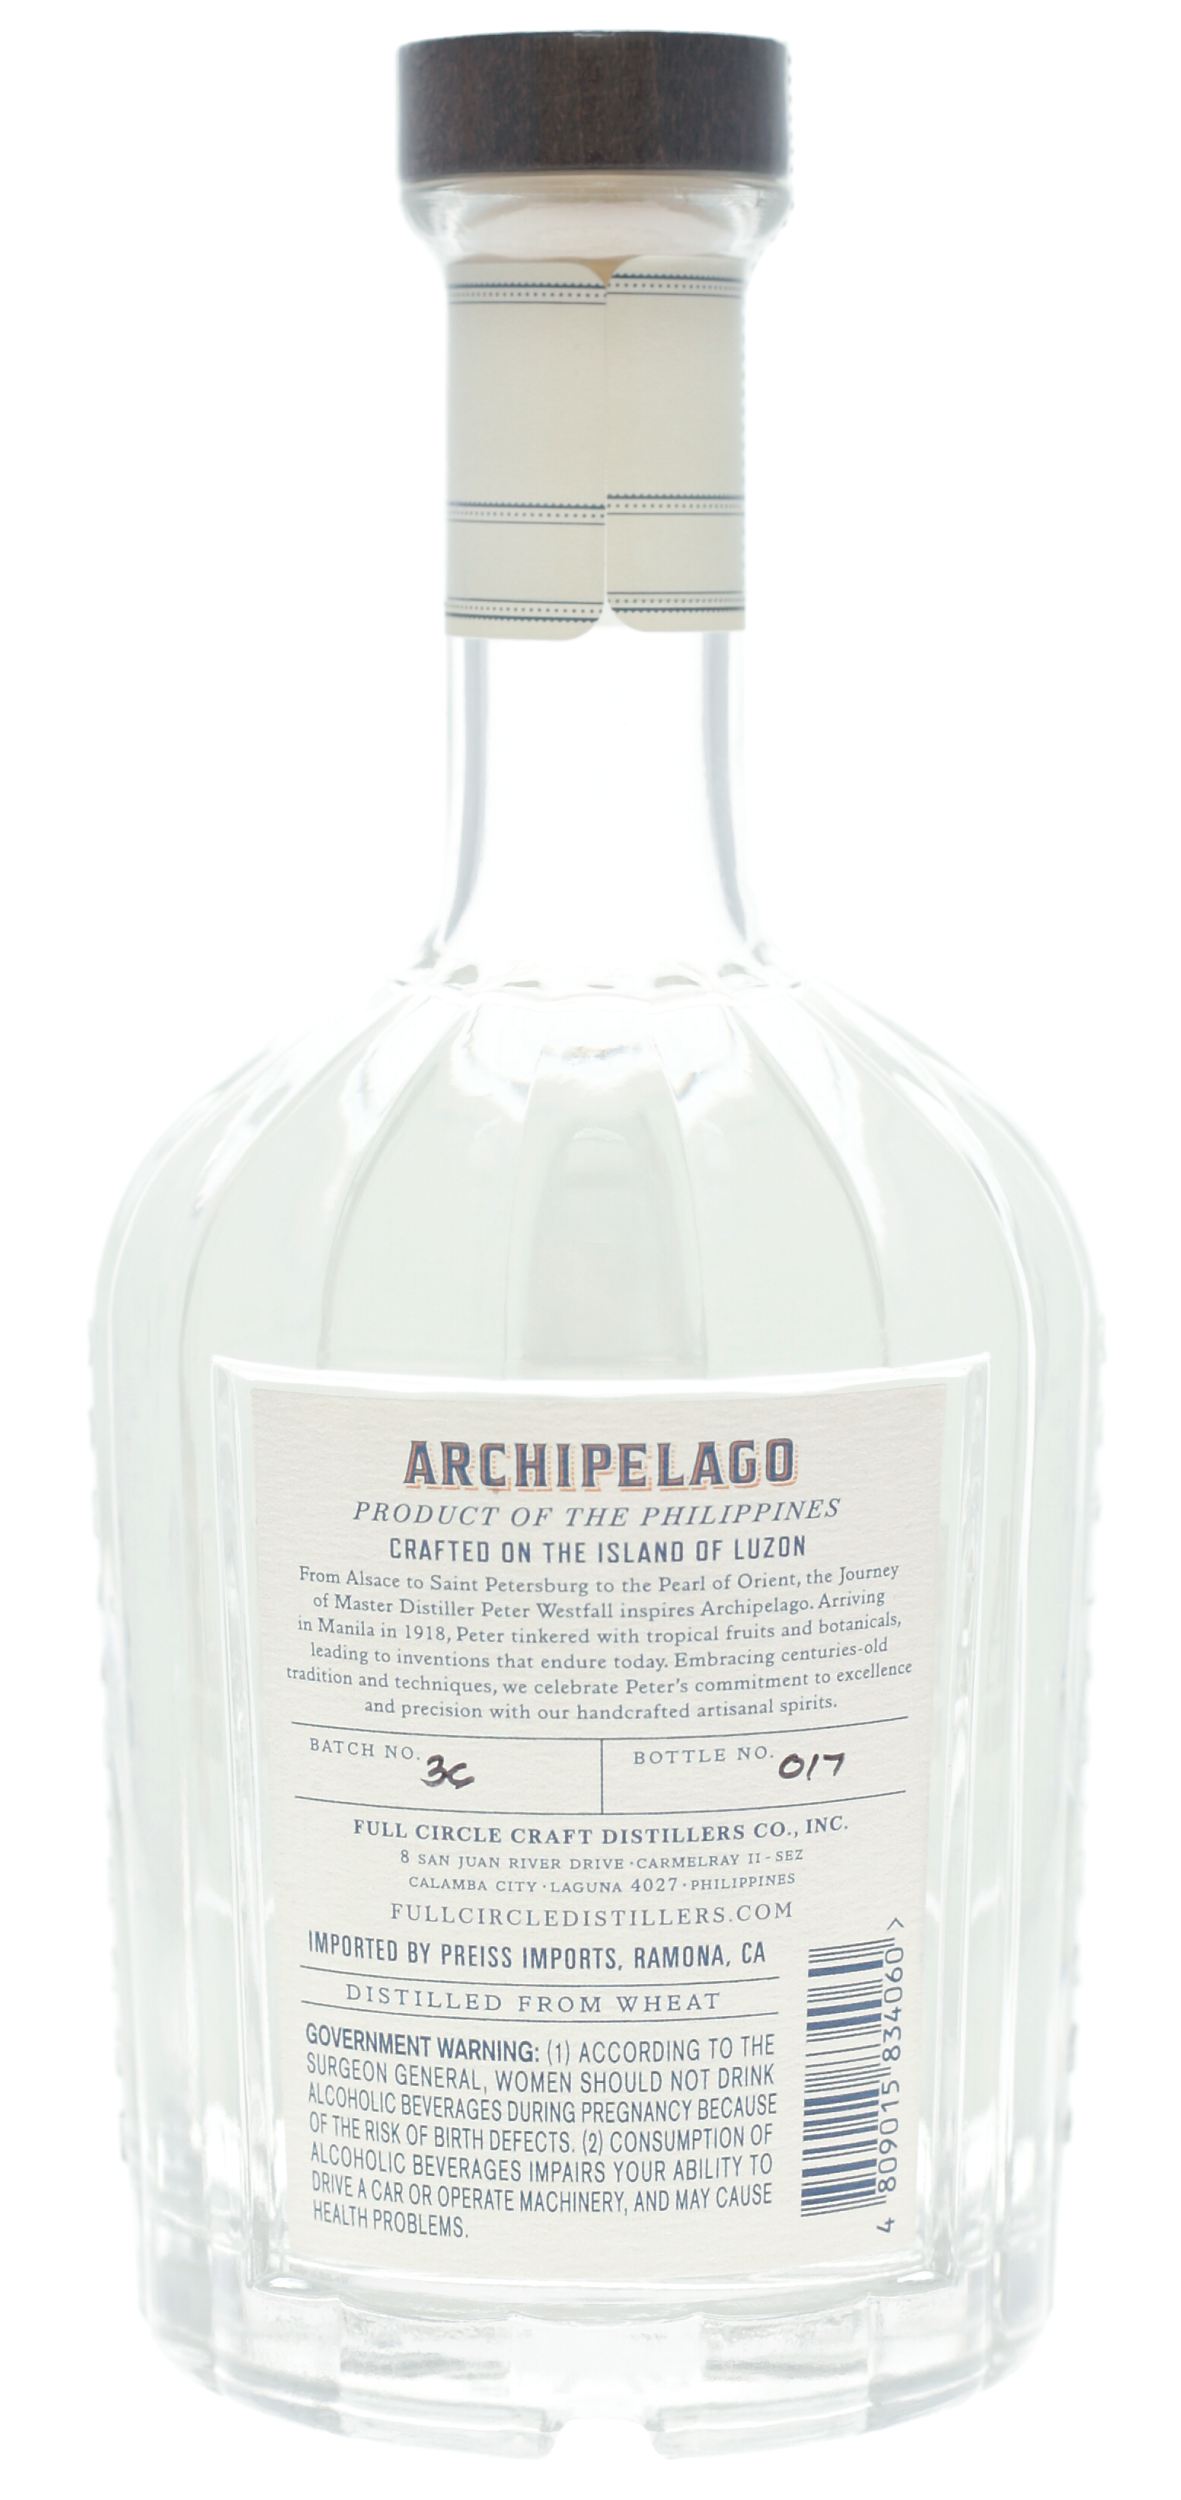 Archipelago Botanical Gin